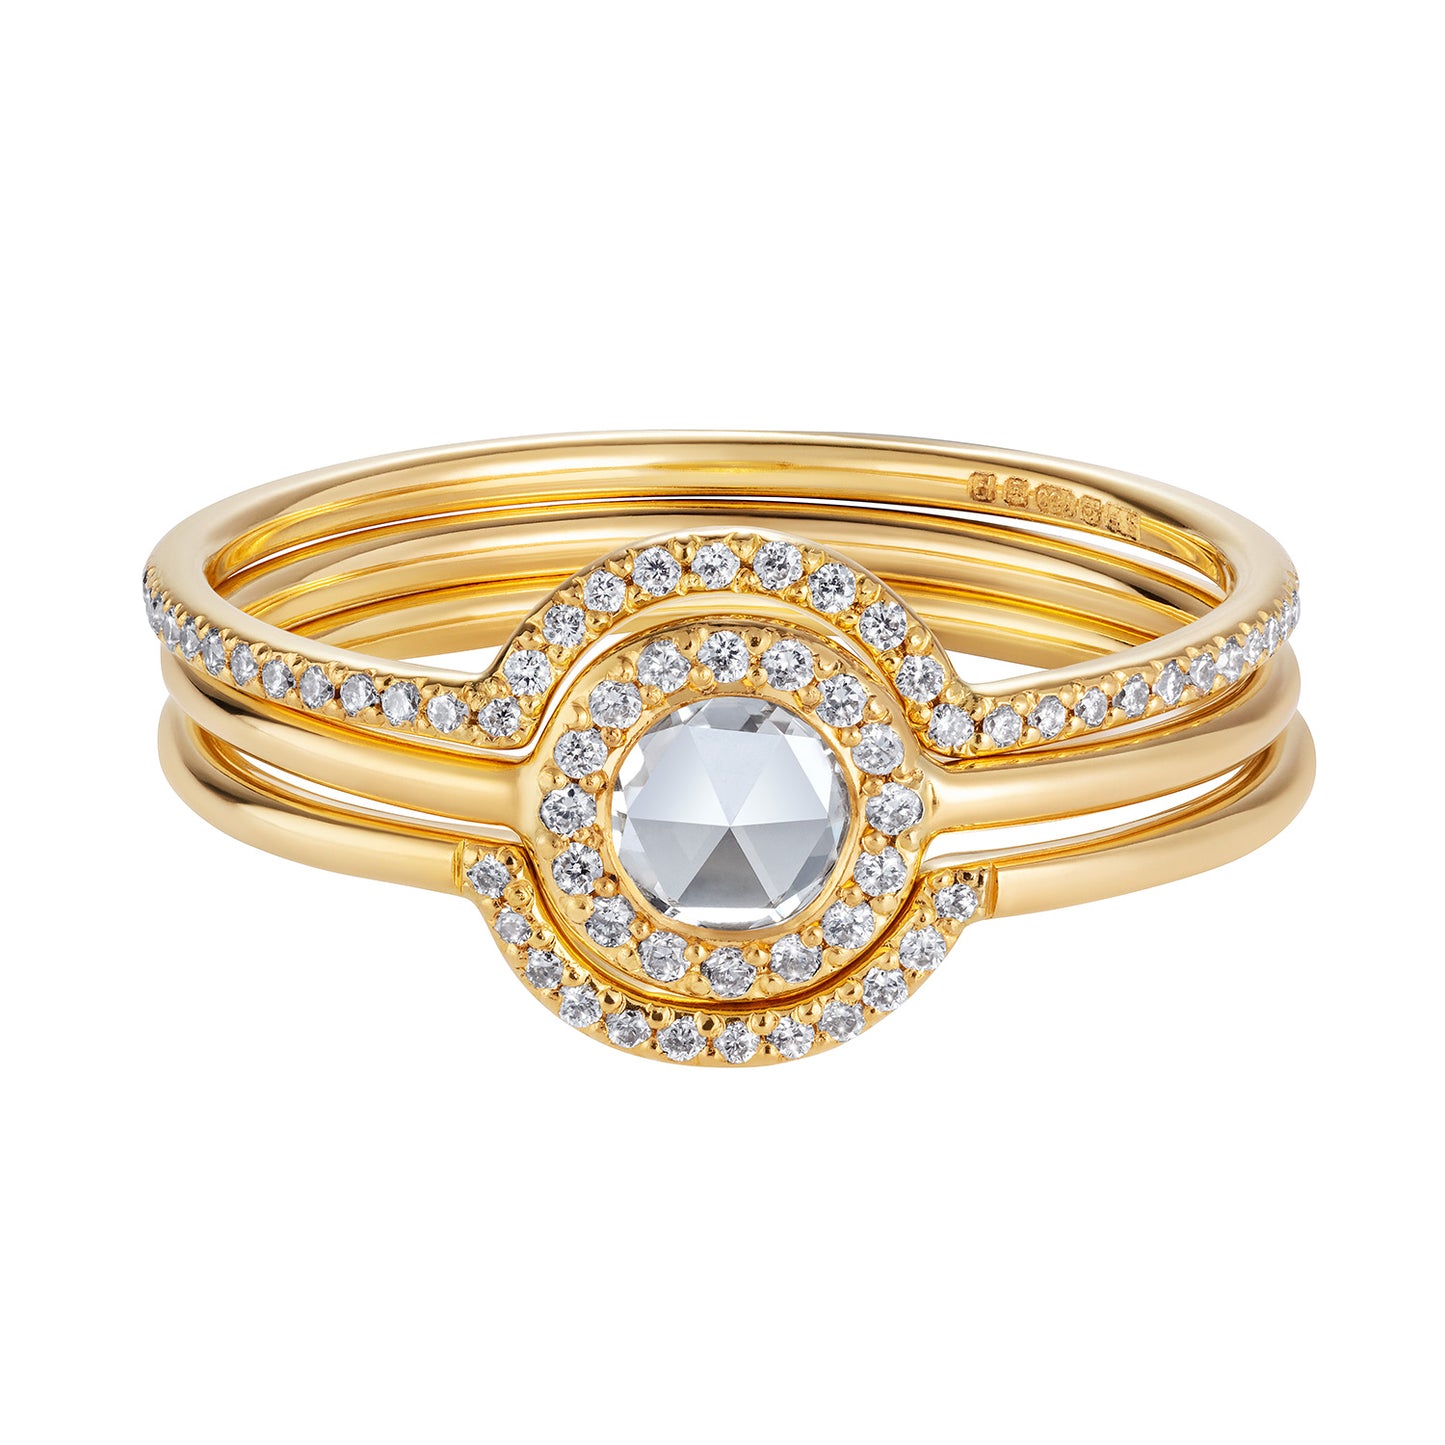 Sweet Pea 18ct yellow gold diamond set horseshoe wedding stacking ring stacked with a rose cut diamond halo engagement ring and a fully set diamond horseshoe ring